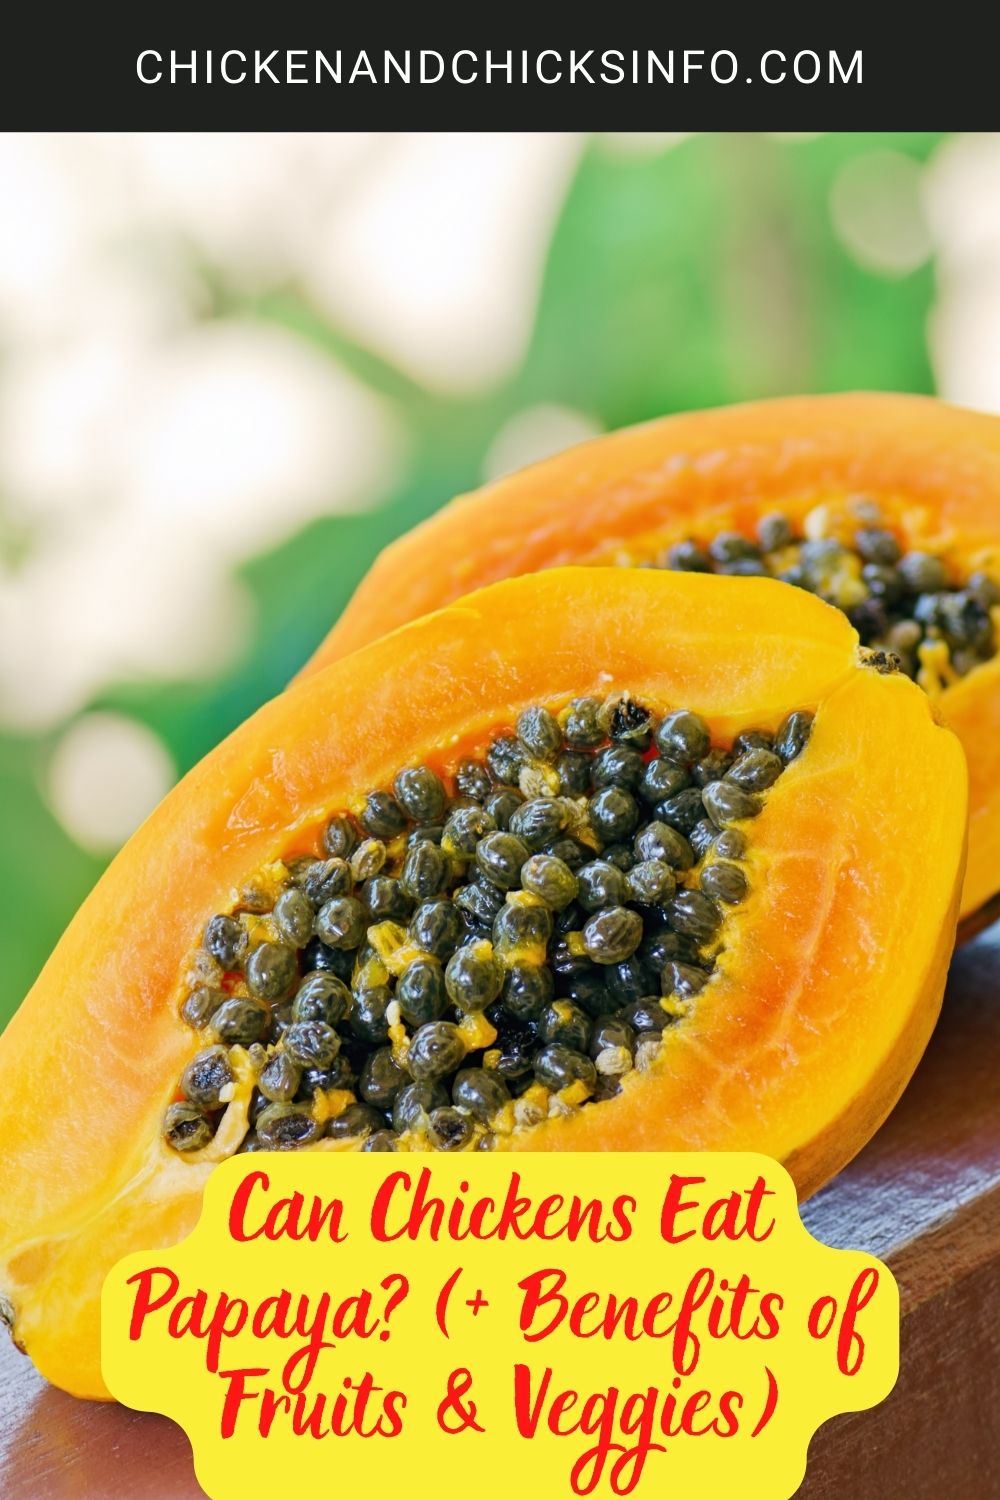 Can Chickens Eat Papaya? (+ Benefits of Fruits & Veggies) poster.
